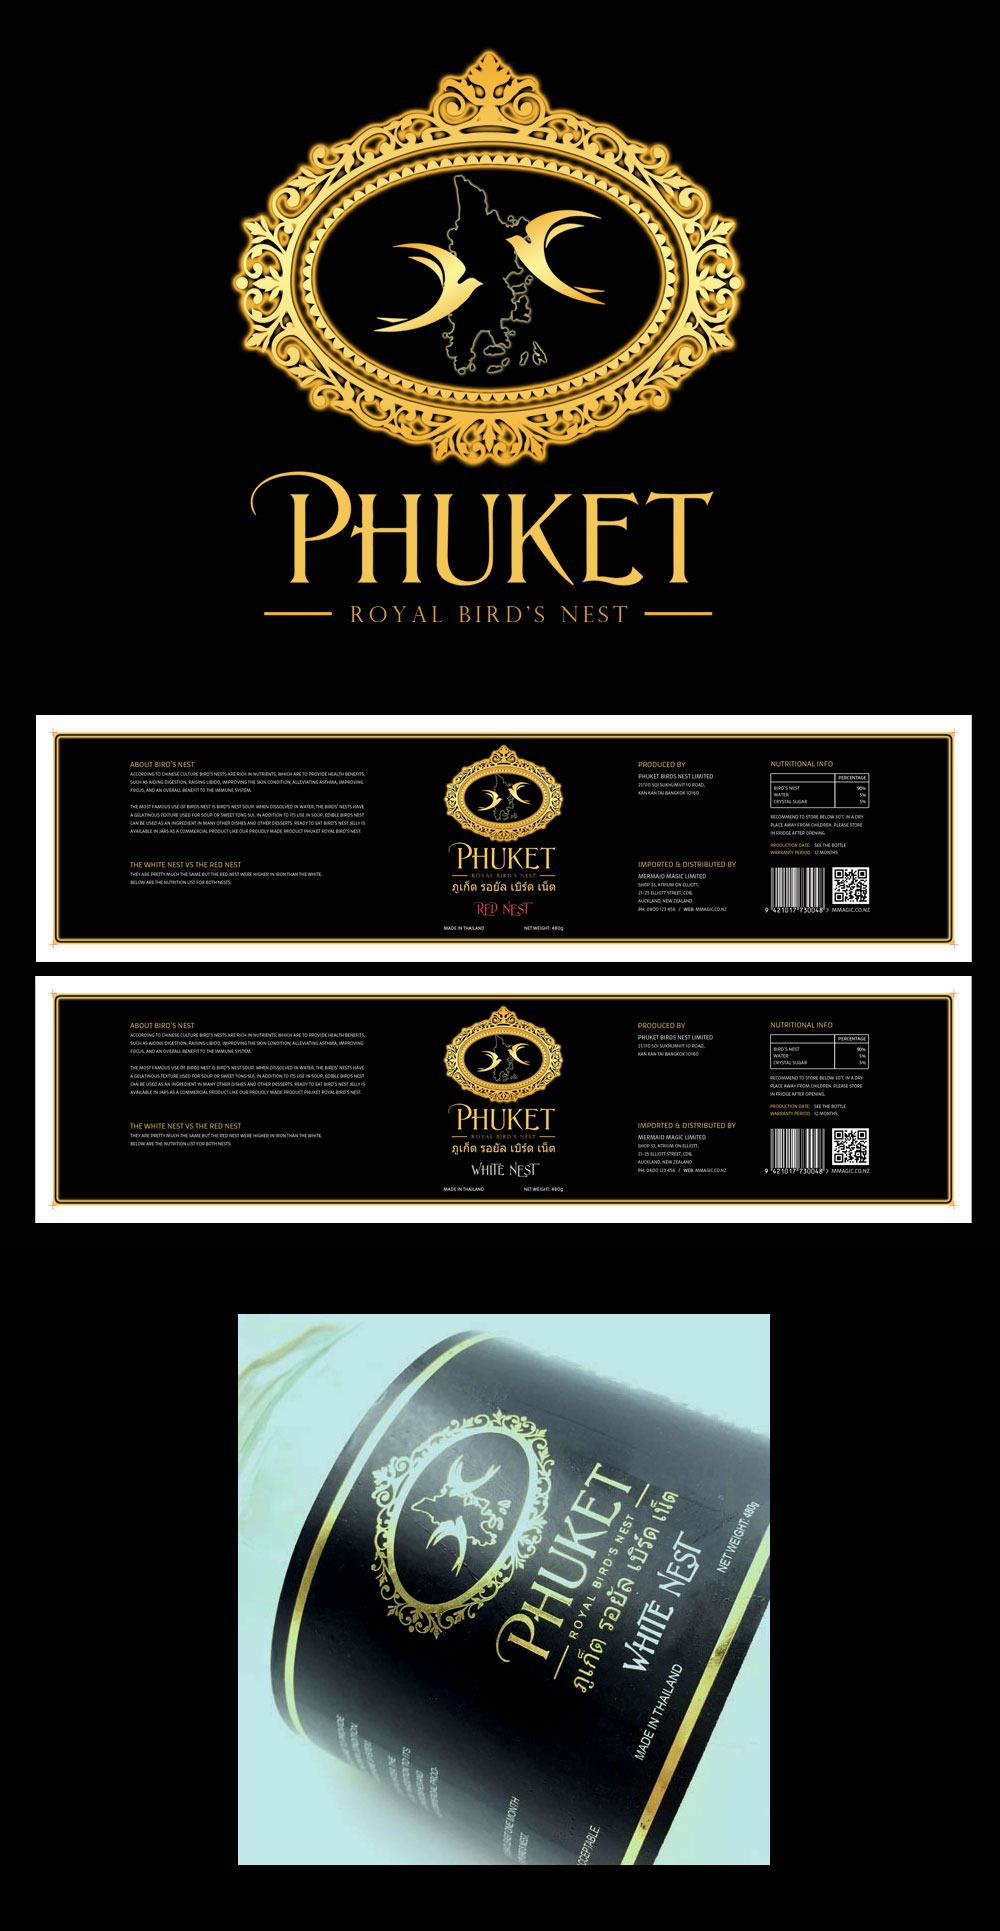 LOGO和产品标签设计案例 - PHUKET ROYAL BIRD'S NET